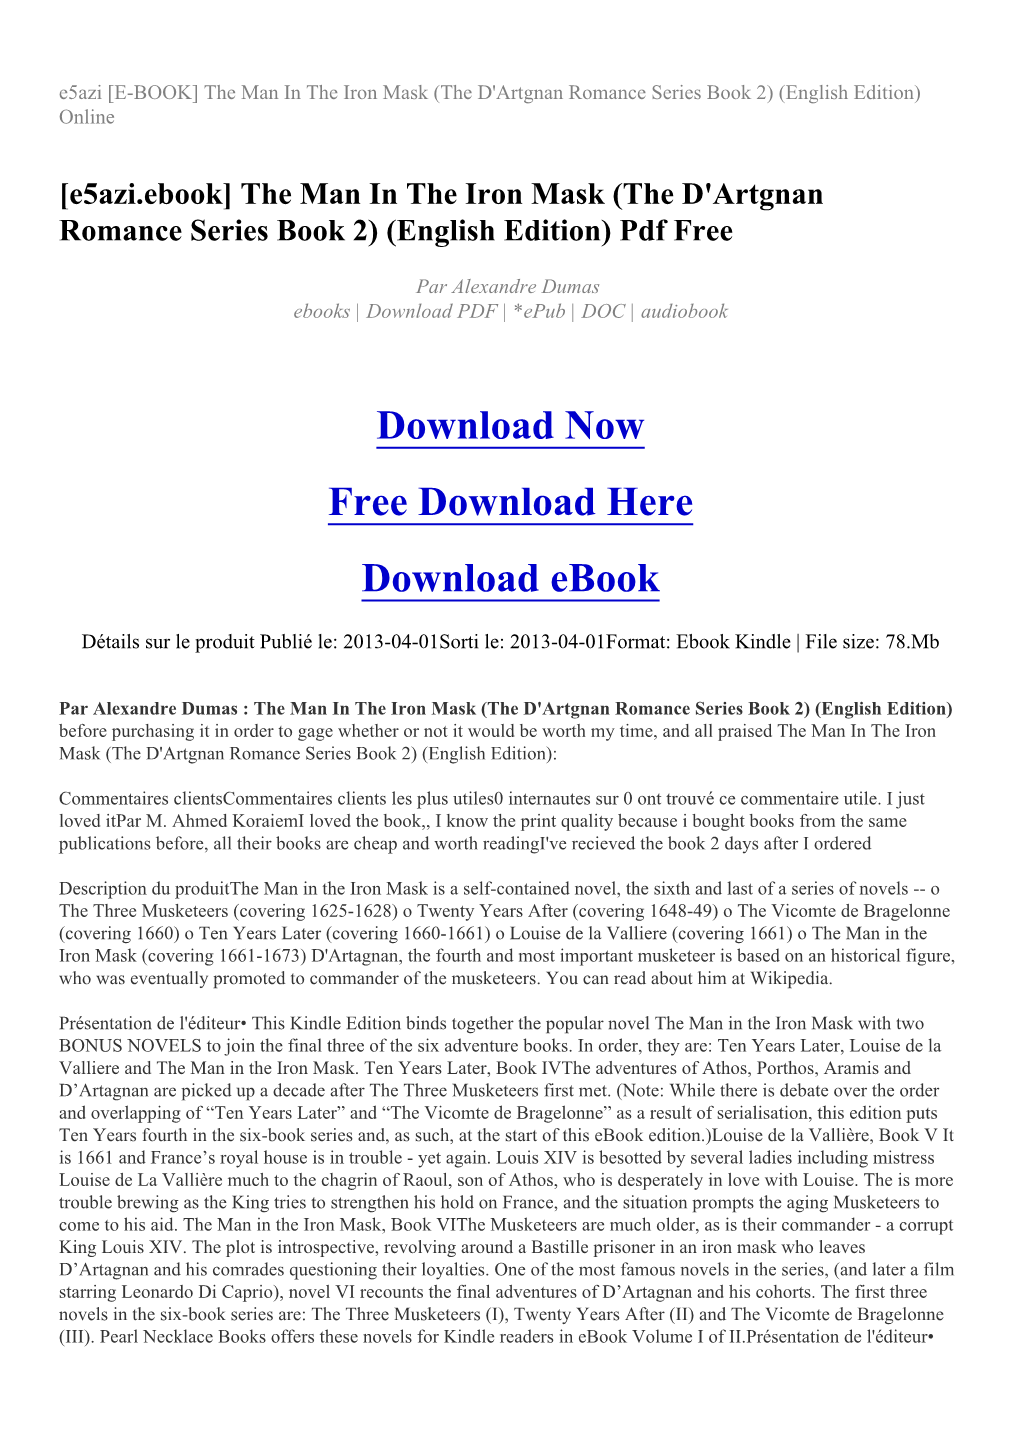 [E5azi.Ebook] the Man in the Iron Mask (The D'artgnan Romance Series Book 2) (English Edition) Pdf Free